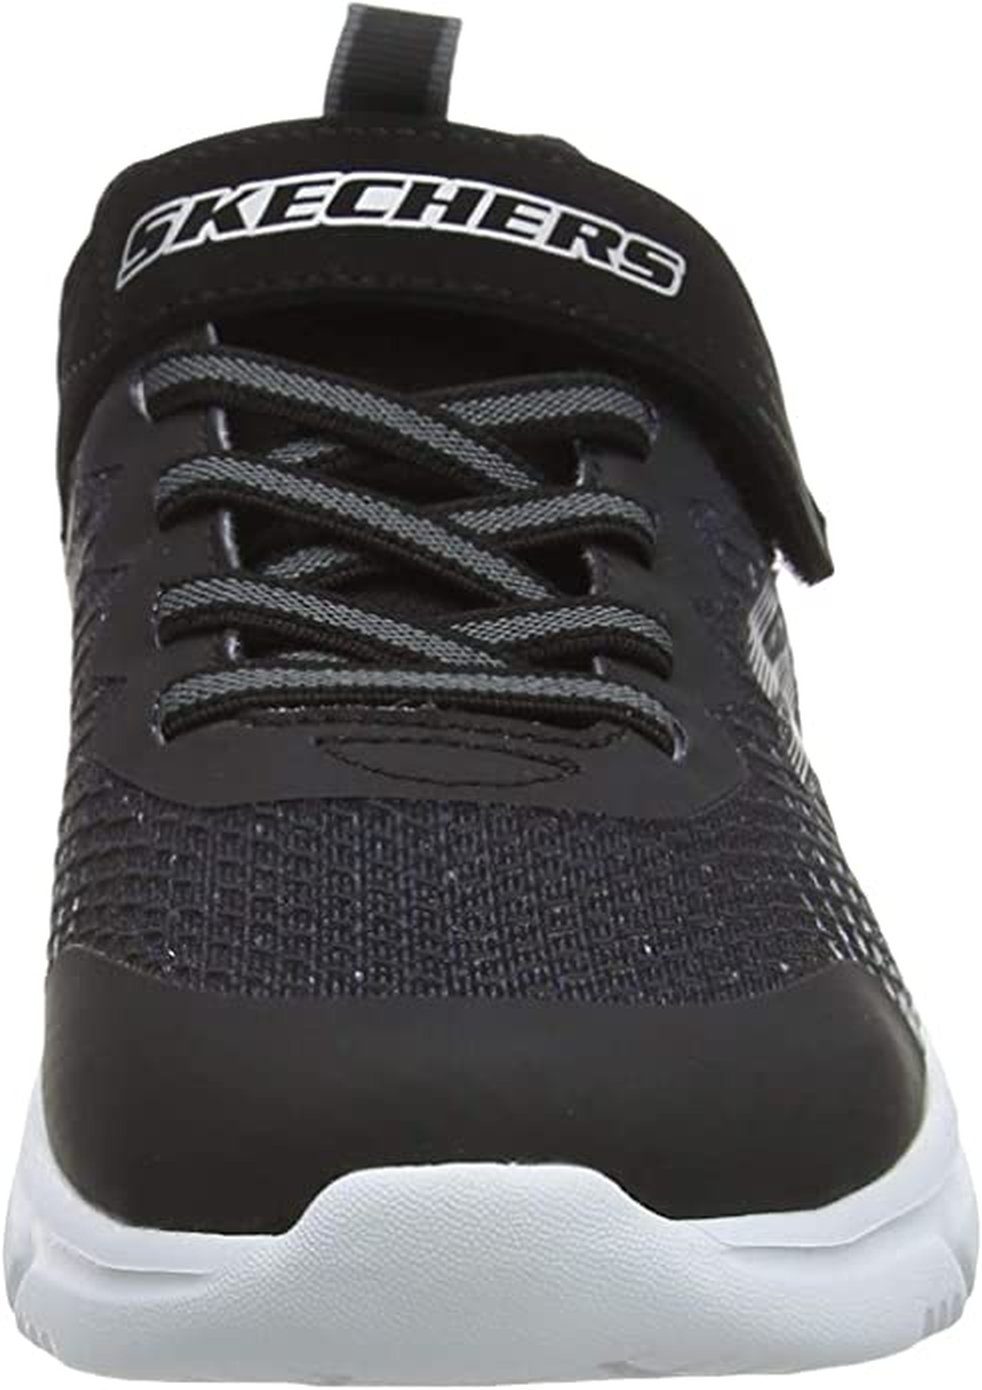 Norvo Schwarz-Grau-Silber - Sneaker BKSL / Skechers Black-Gray-Black-Silver